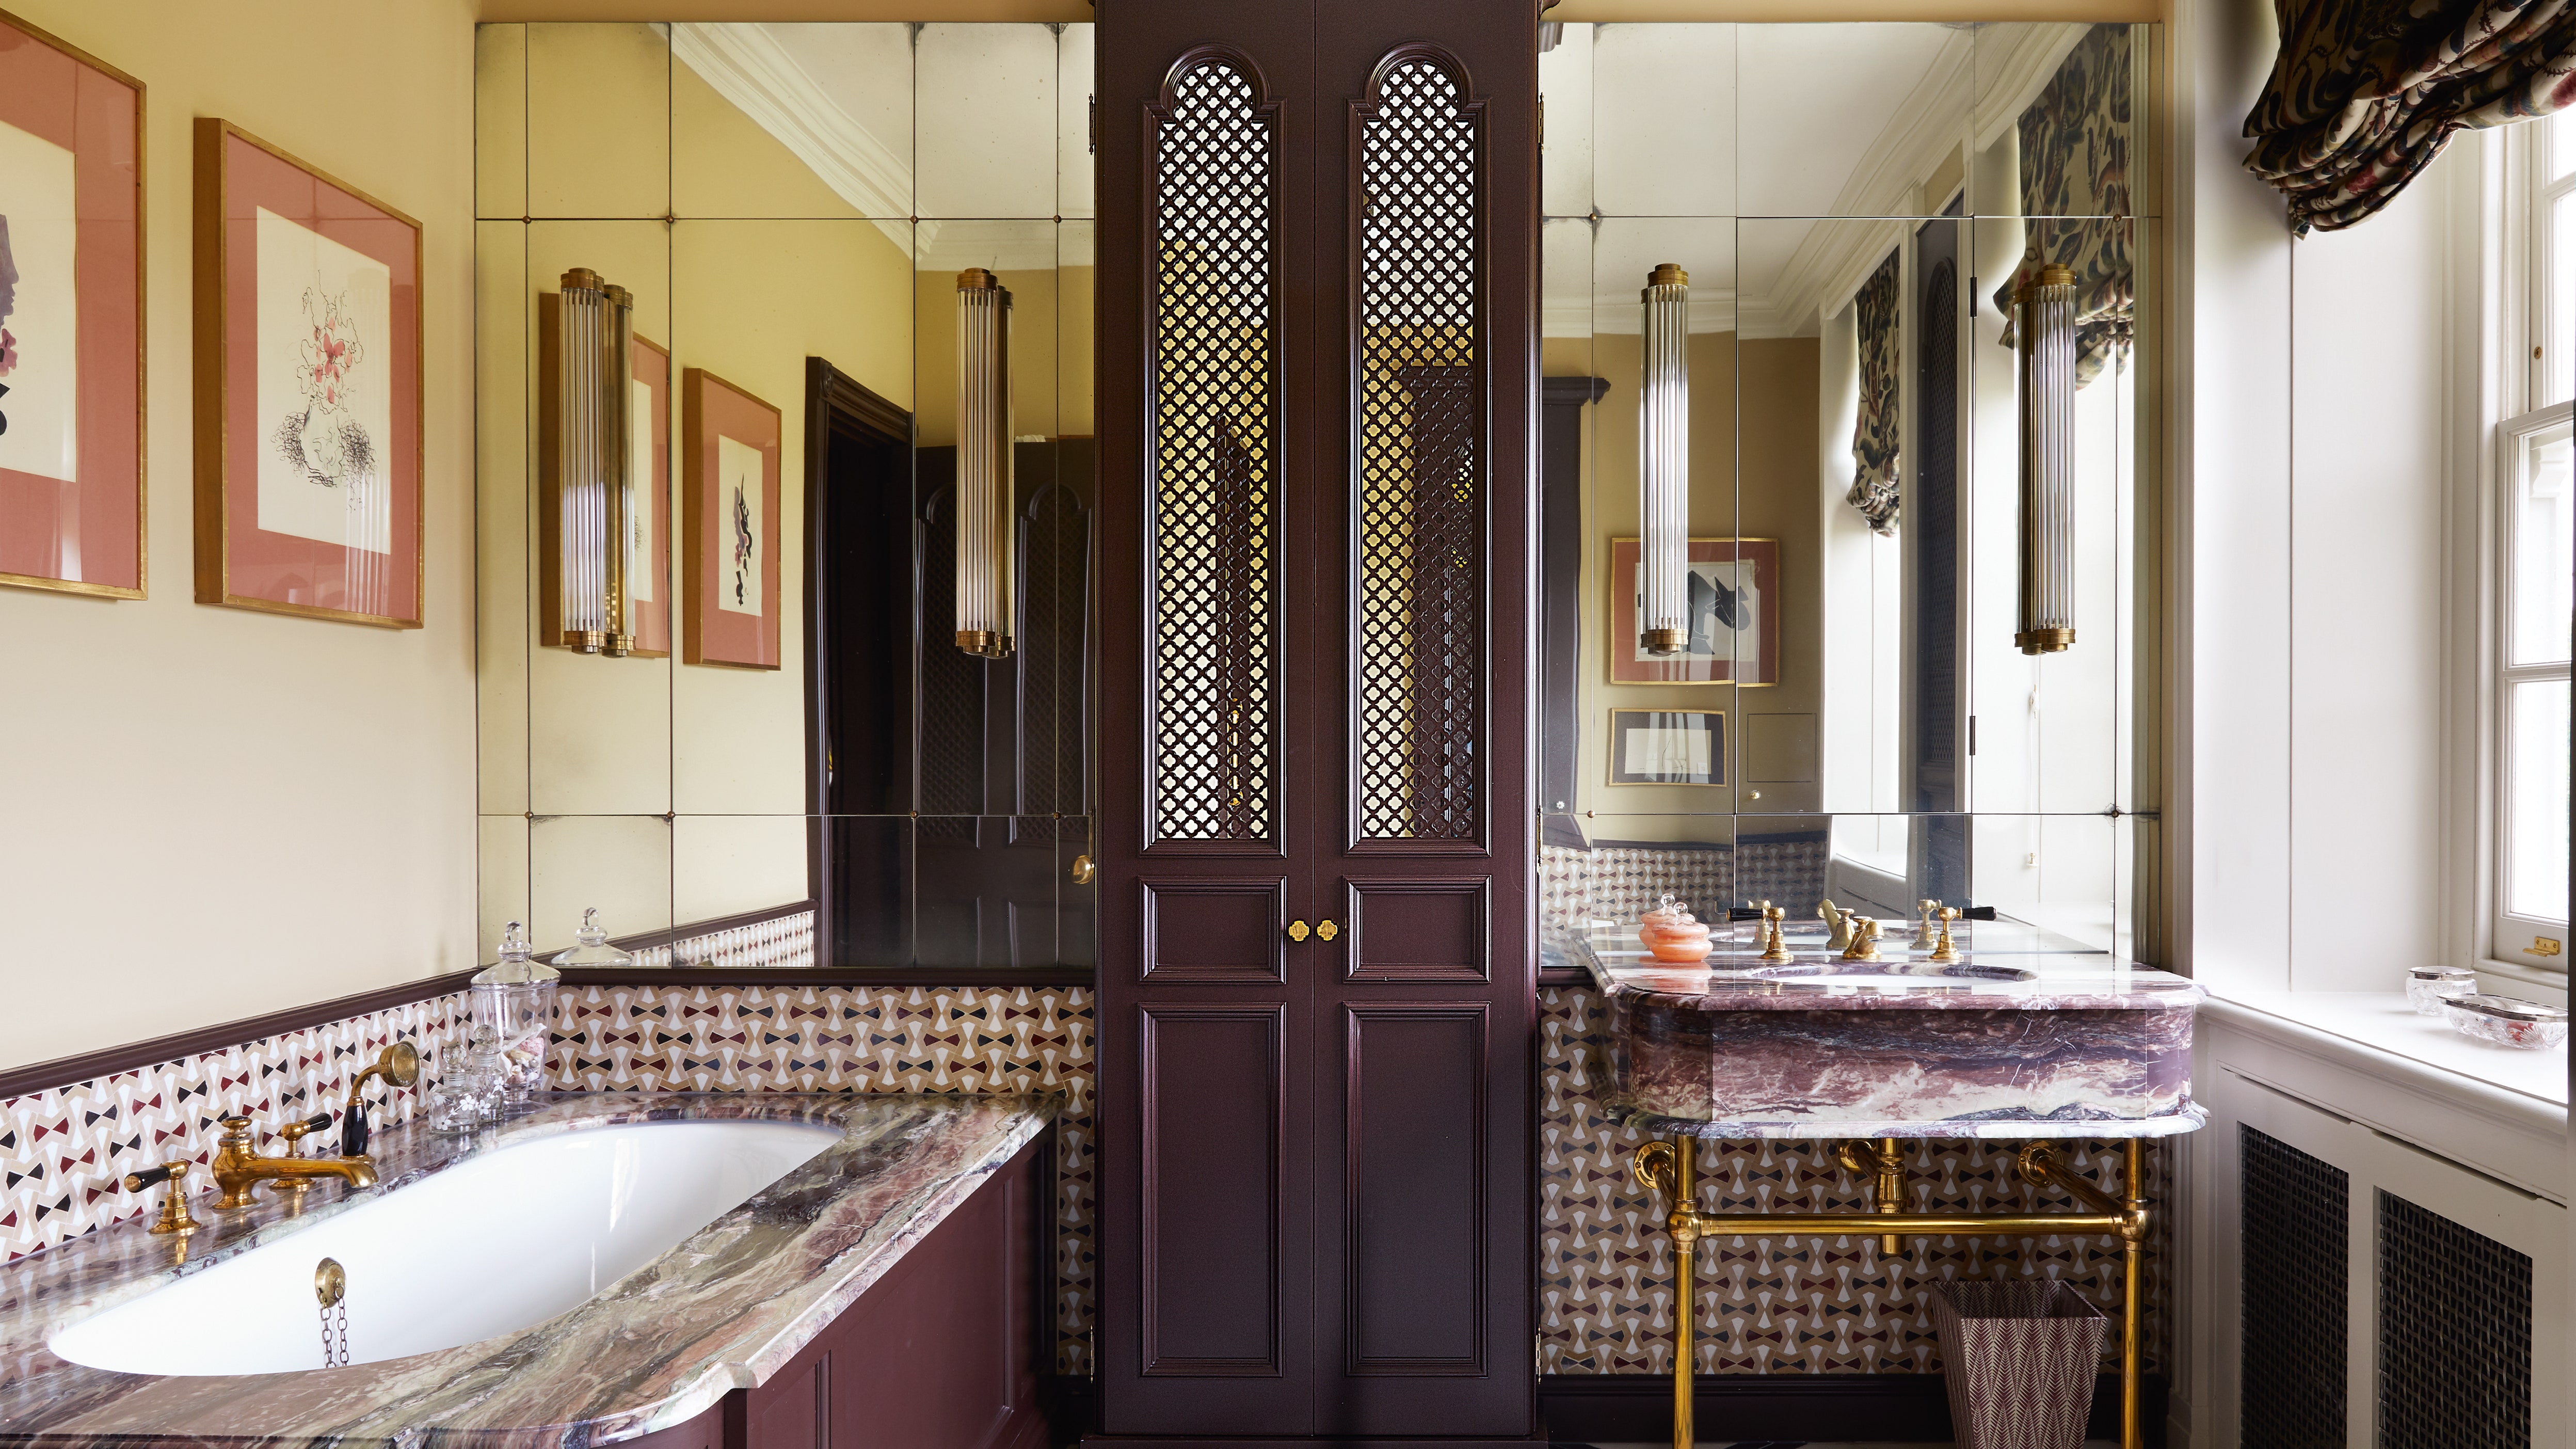 Parisian bathroom decor – 10 ways to achieve an elegant aesthetic